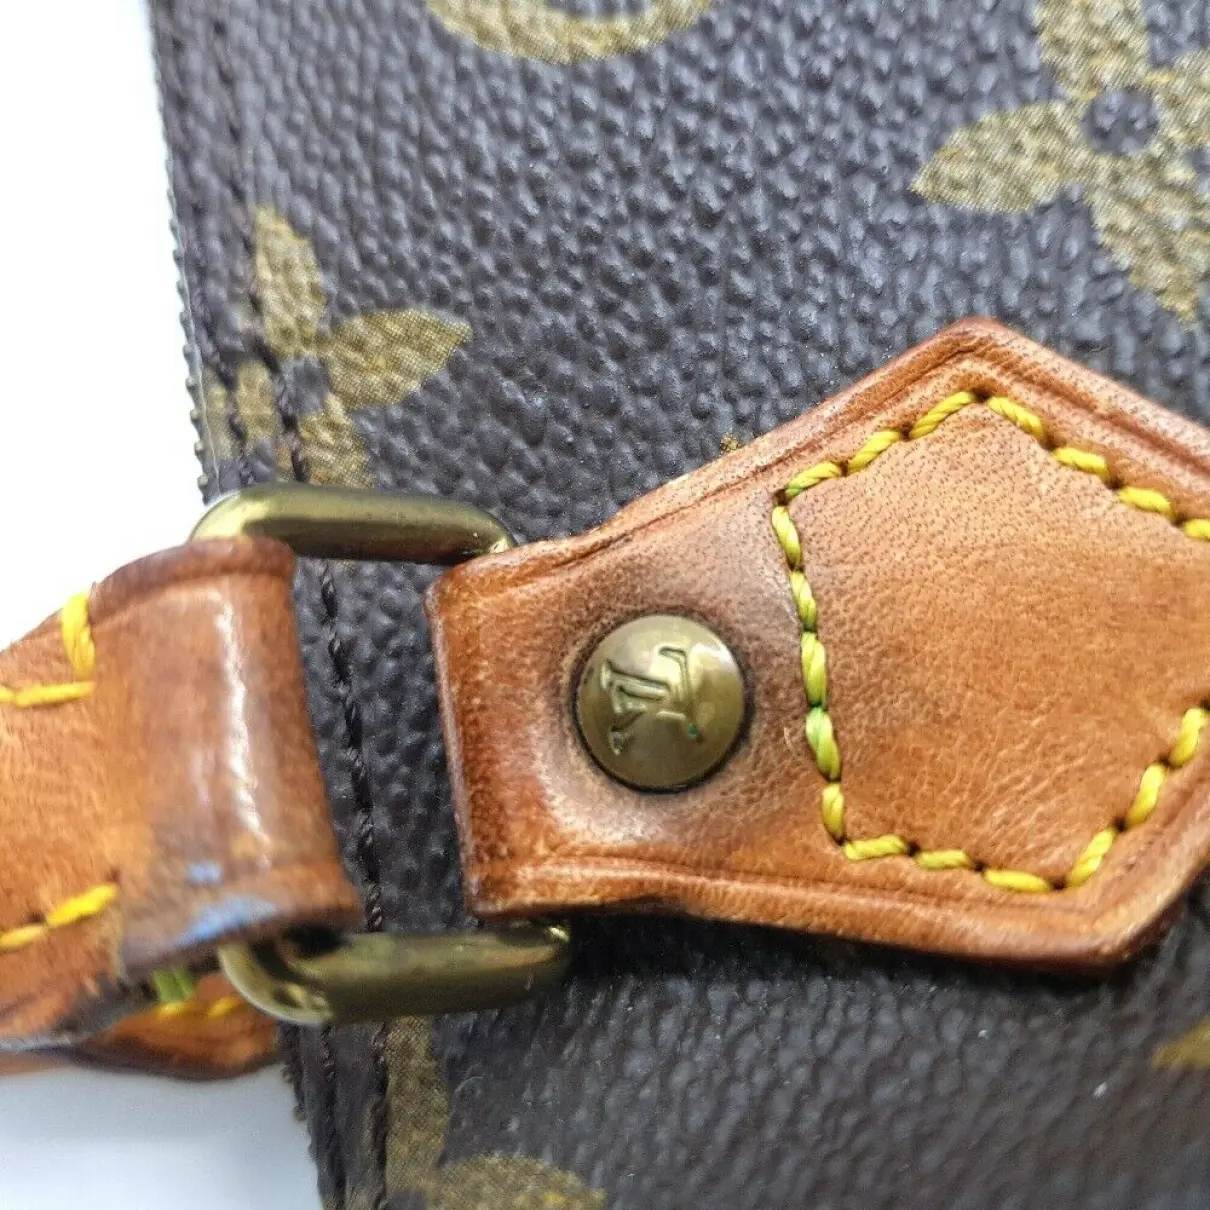 Nano Speedy / Mini HL cloth handbag Louis Vuitton